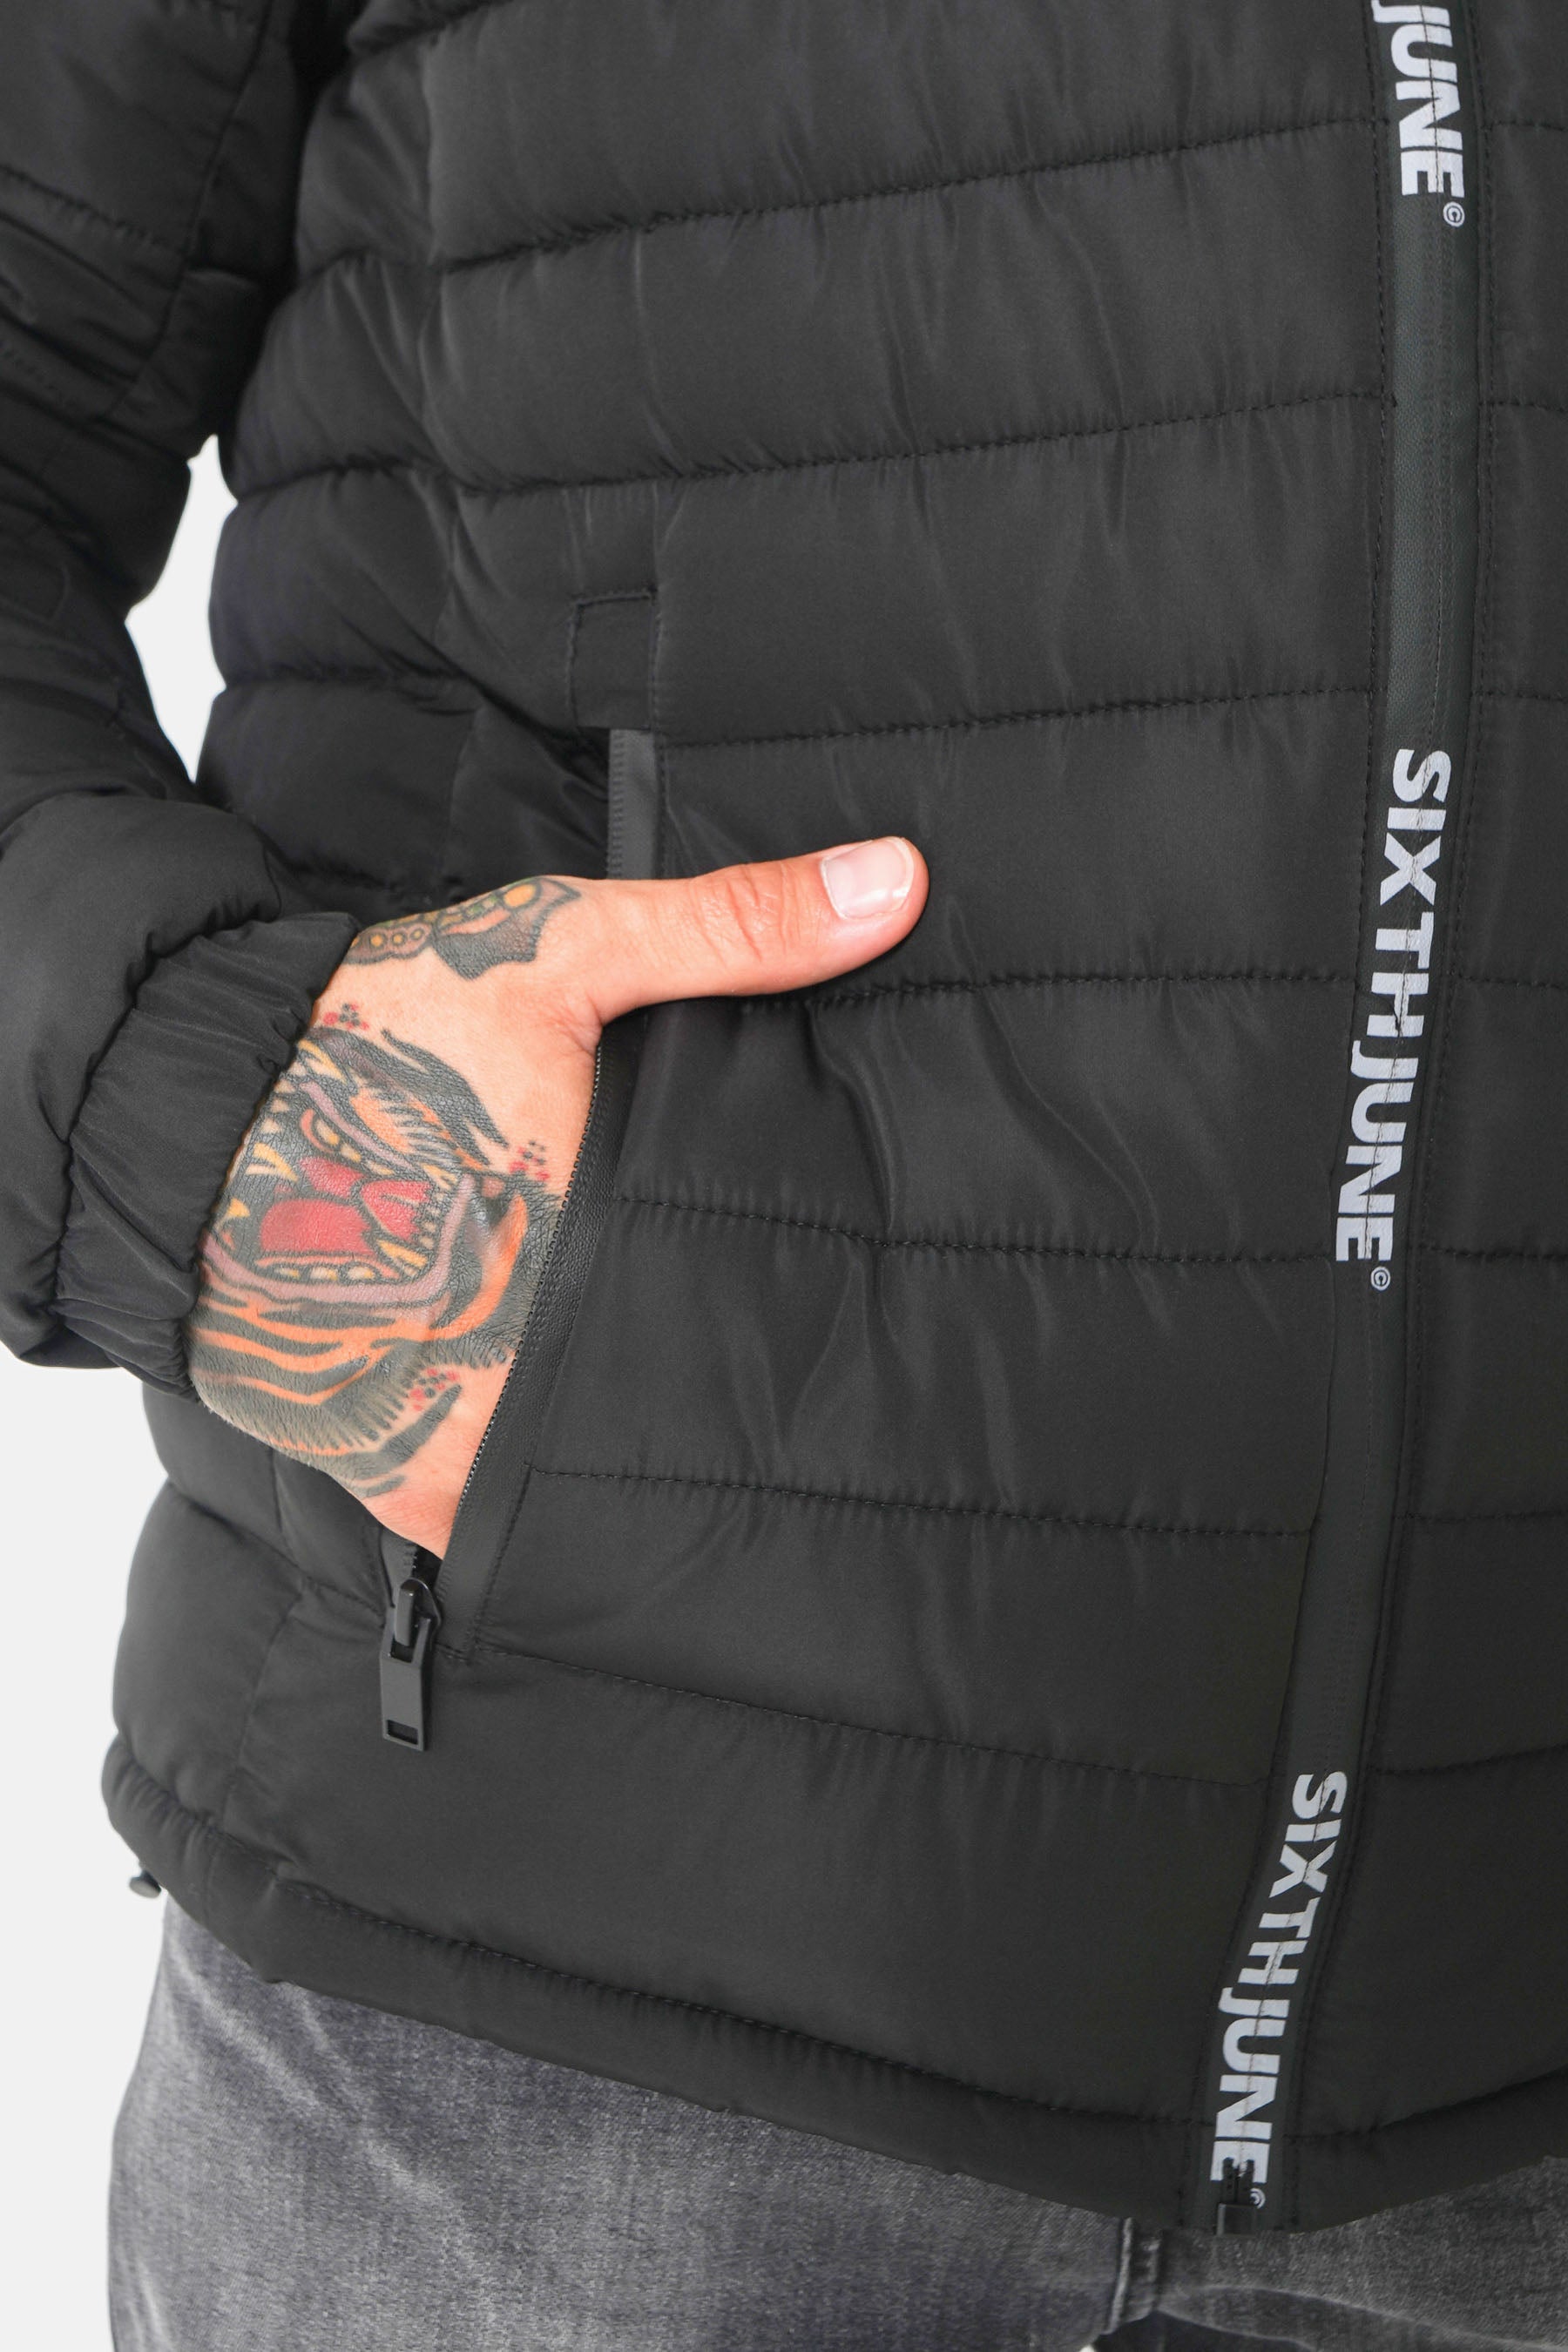 Printed zipper down jacket Black